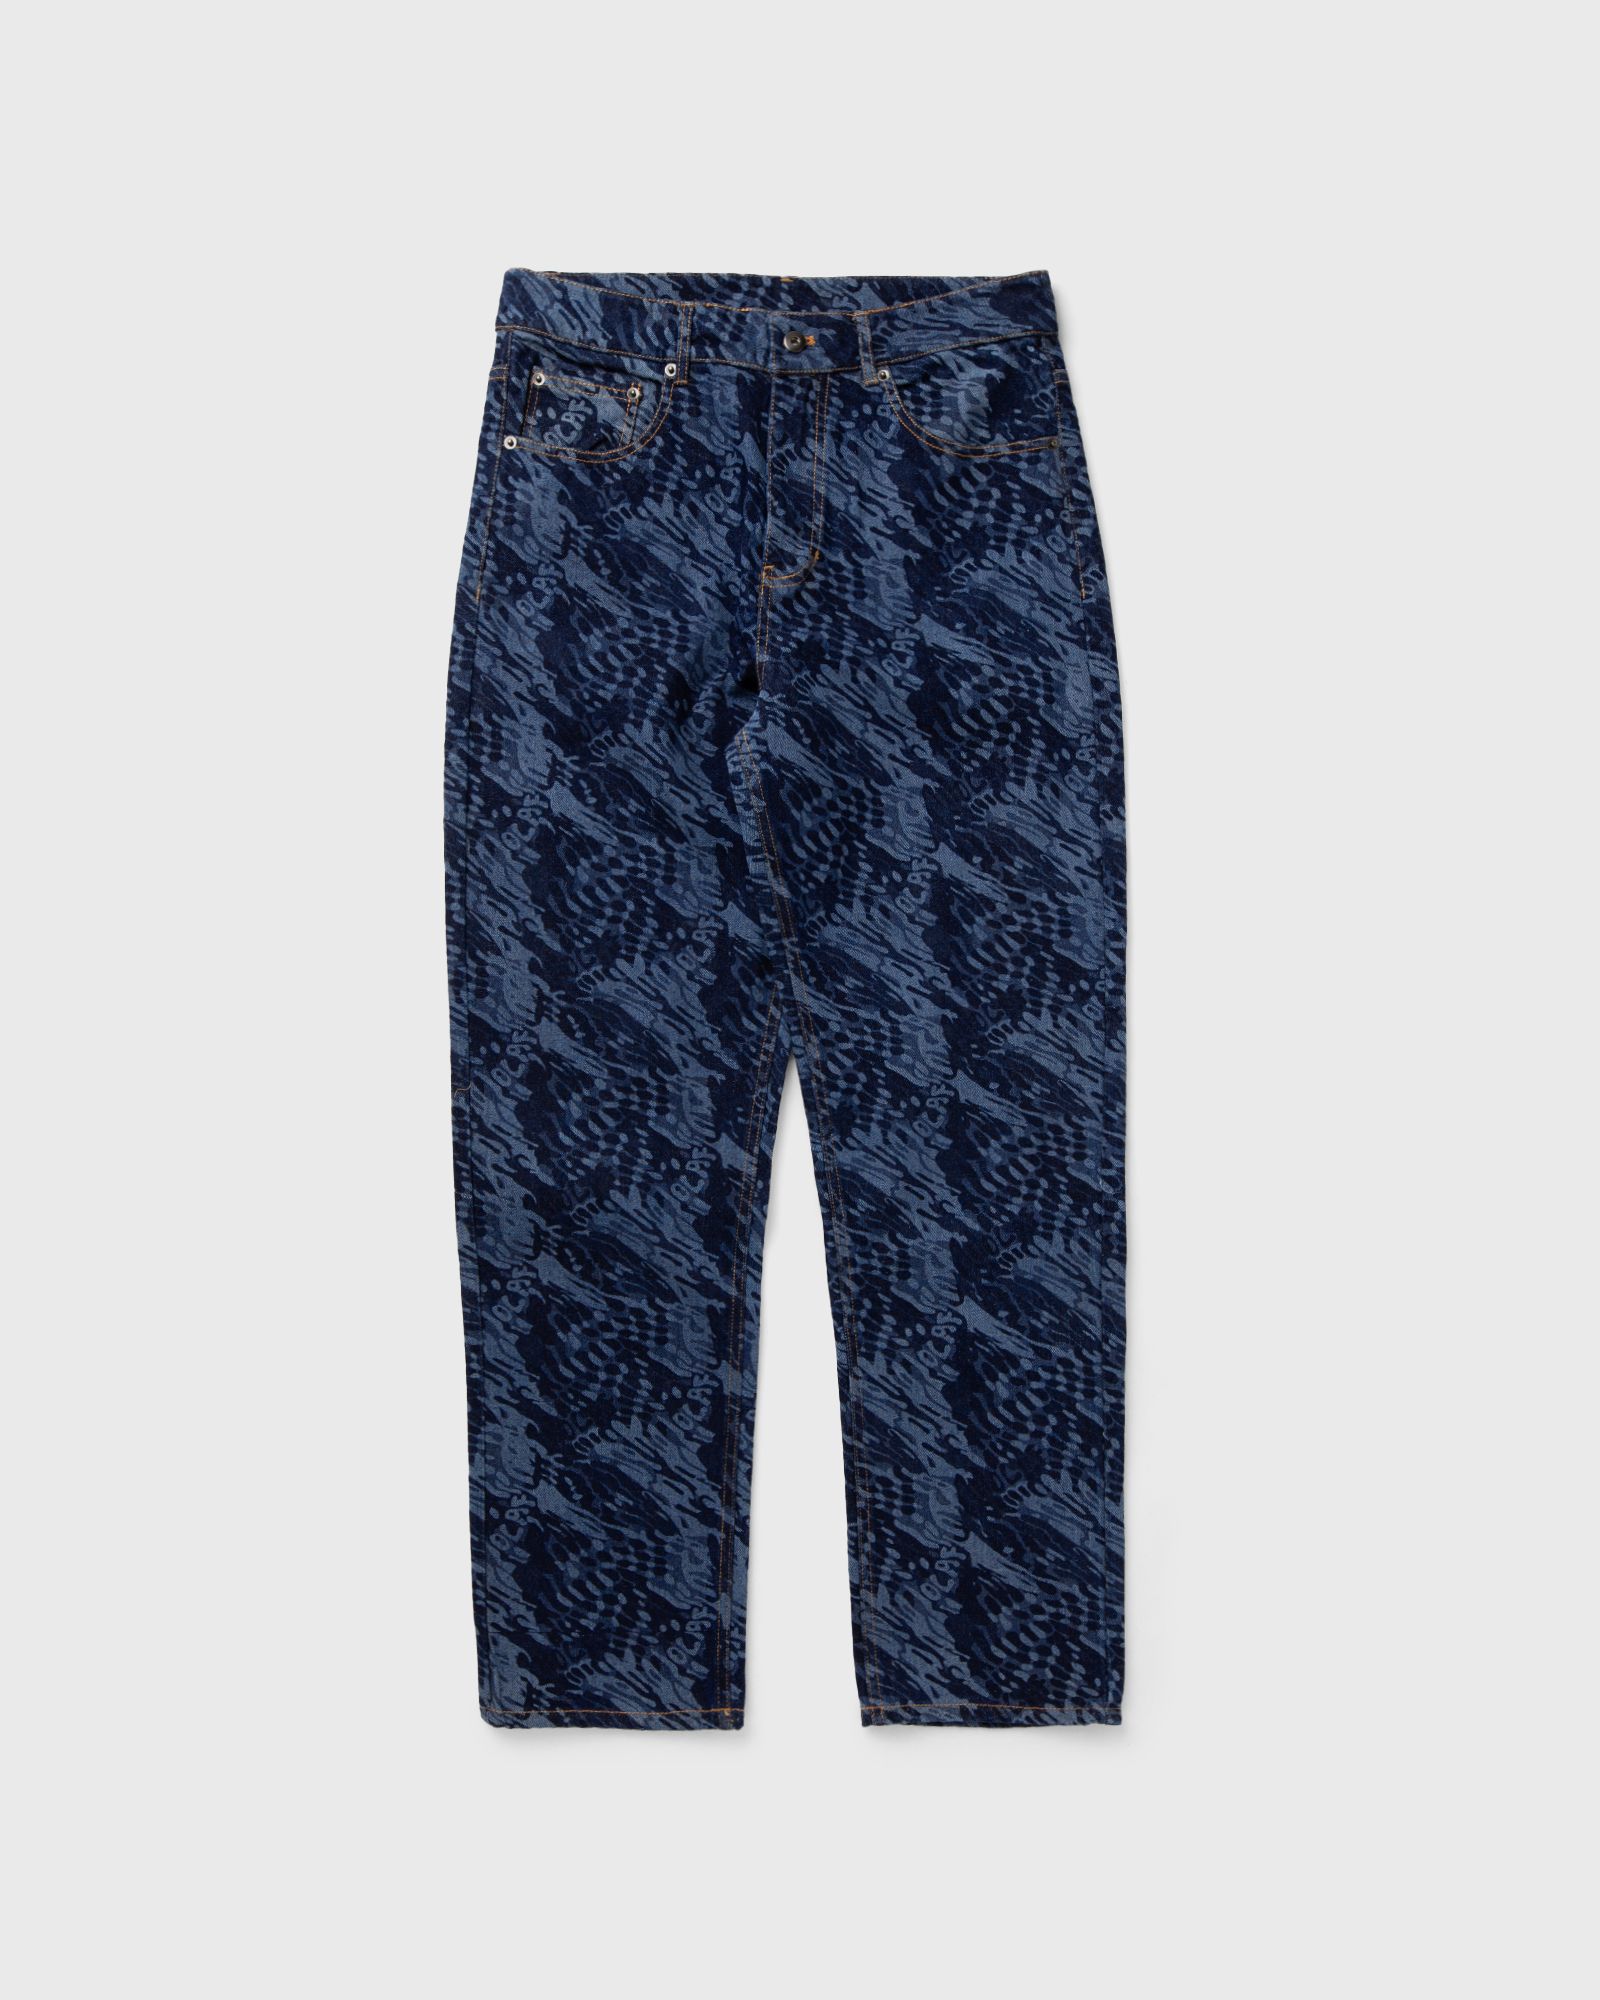 ØLÅF WATER AOP DENIM PANTS men Jeans blue in Größe:L von ØLÅF